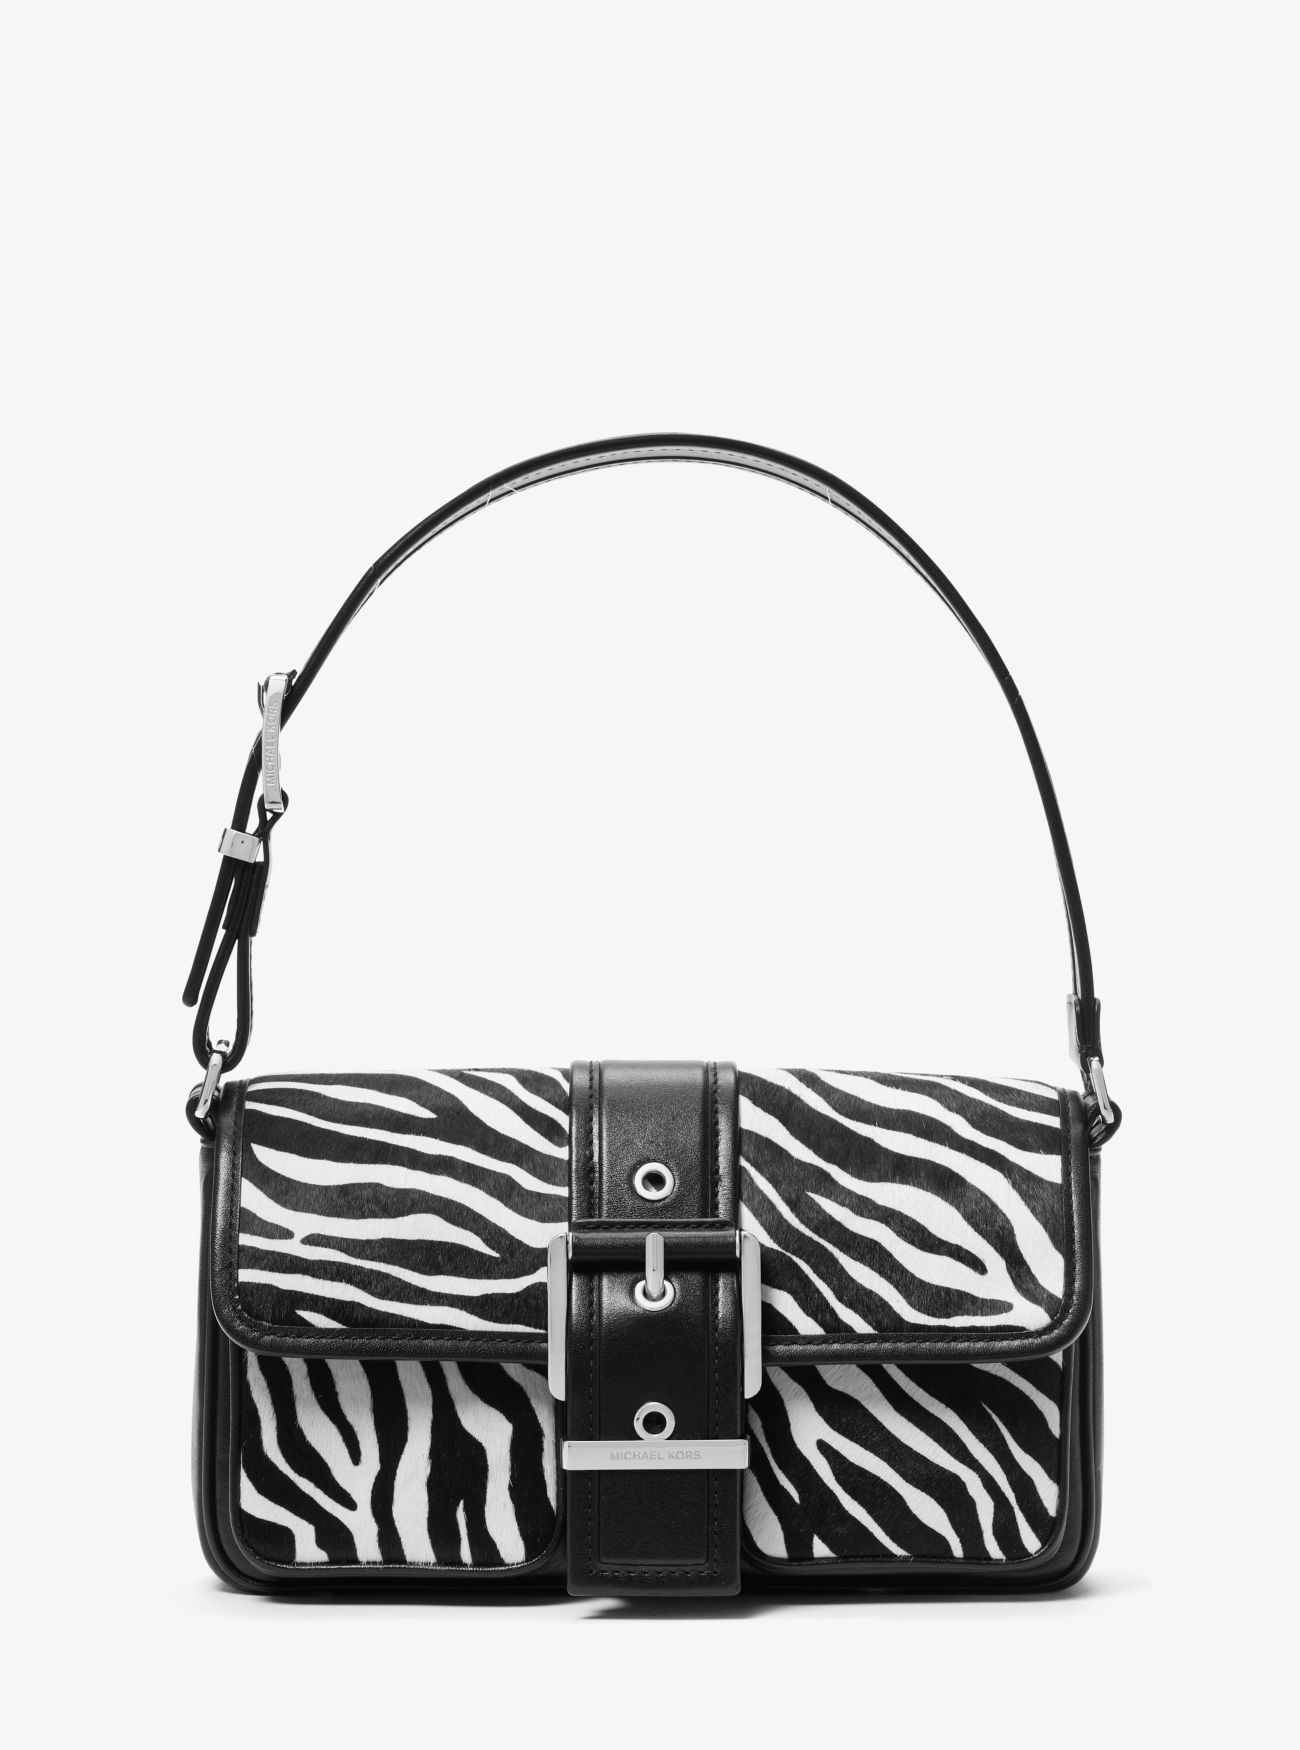 MK Colby Medium Zebra Print Calf Hair Shoulder Bag - Black - Michael Kors